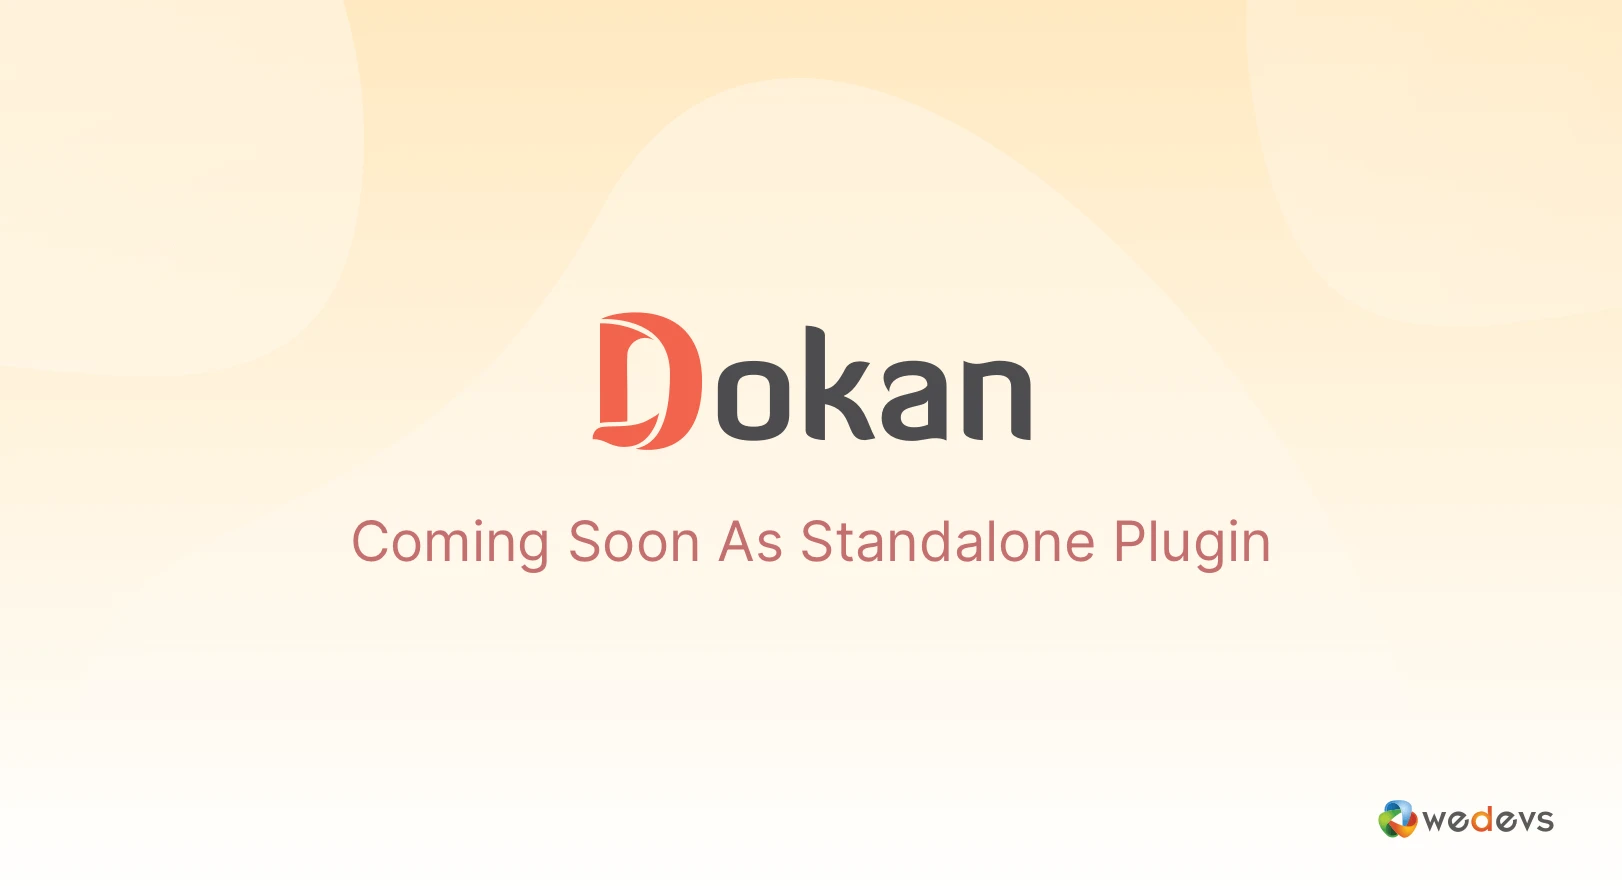 Dokan Coming Soon As Standalone Plugin